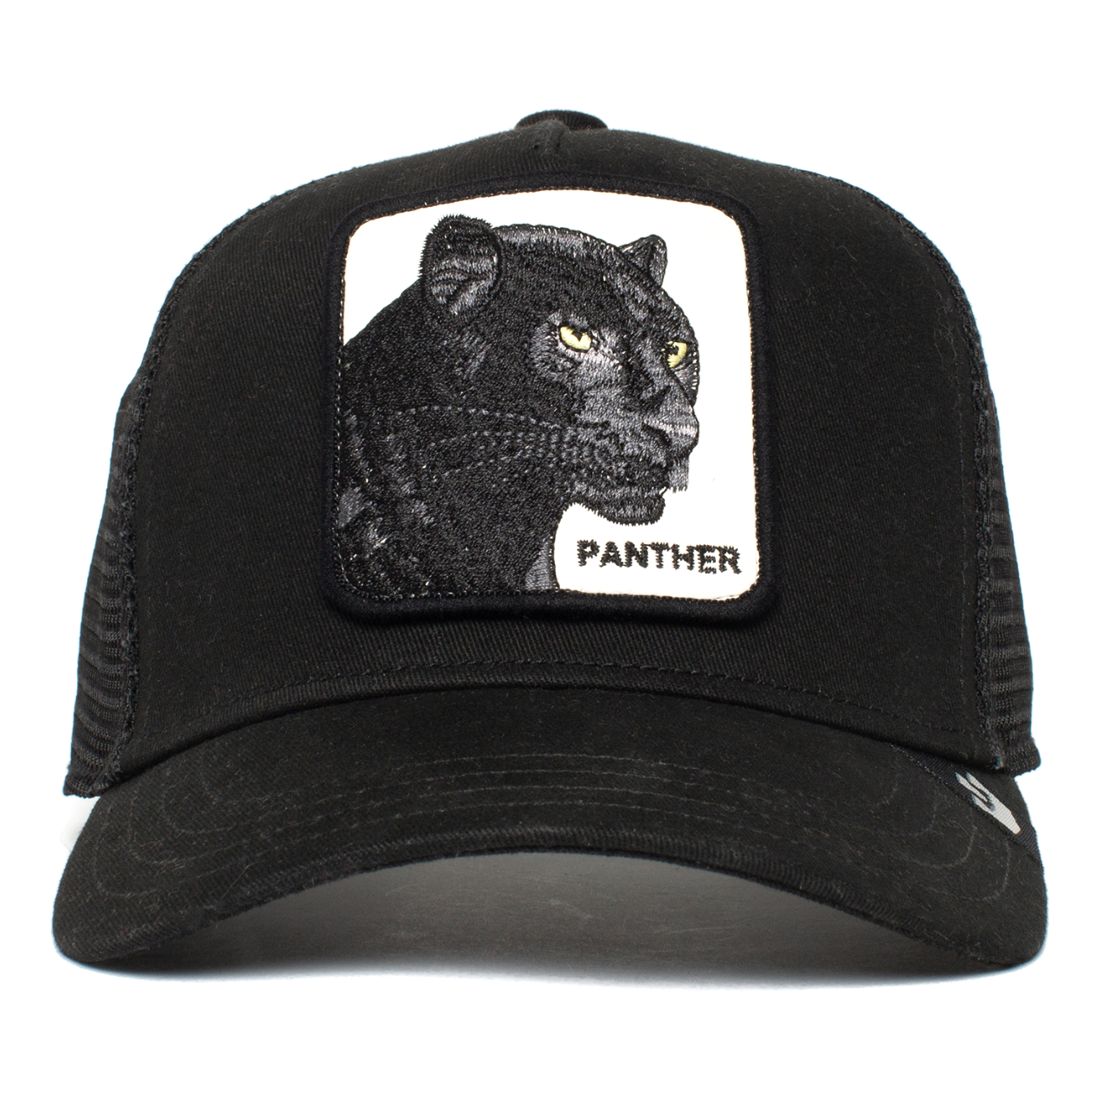 Goorin Bros Little Panther Kids' Trucker Cap Black